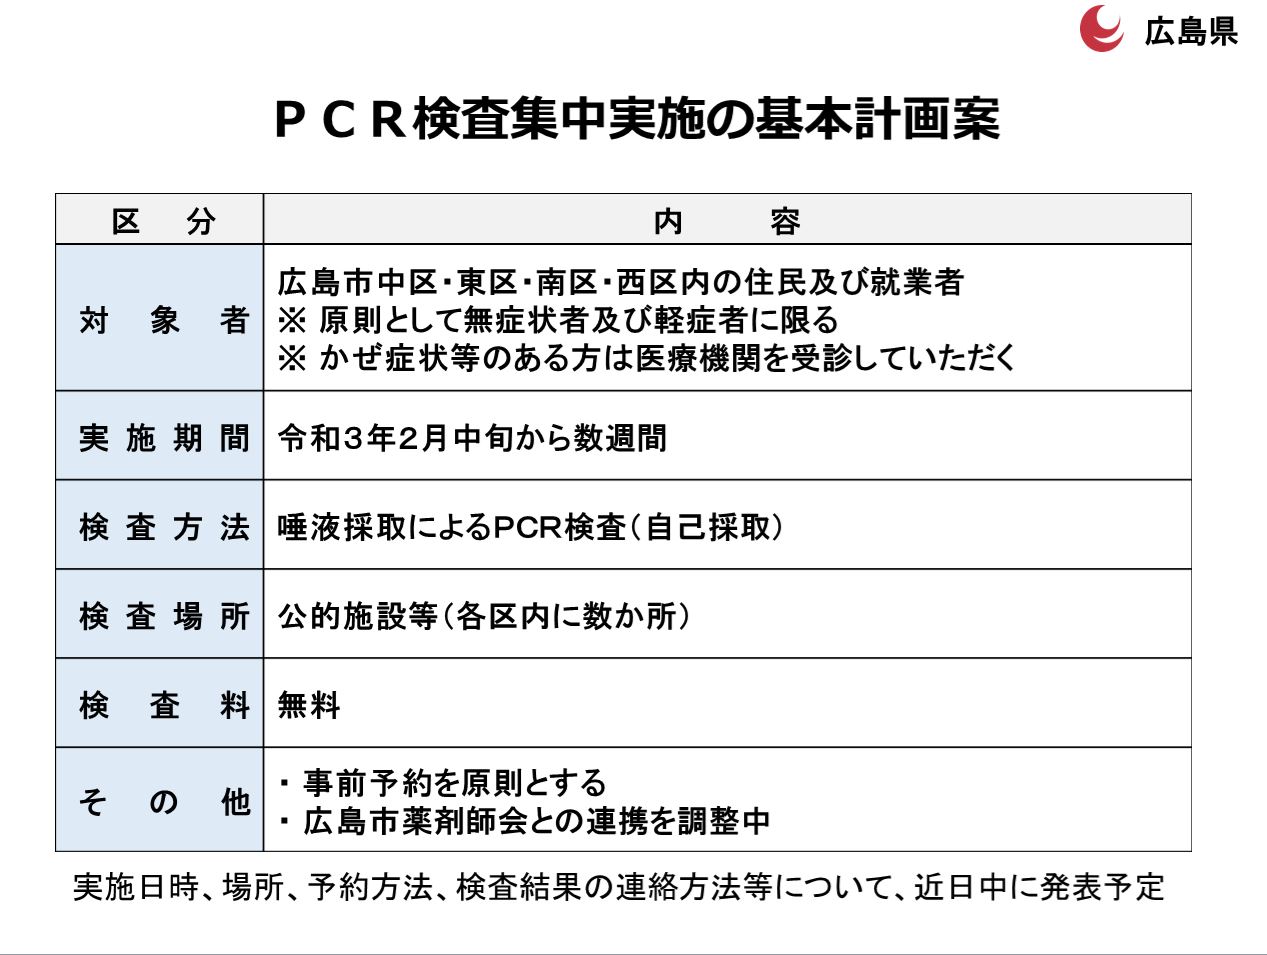 PCR検査集中実施の基本計画案